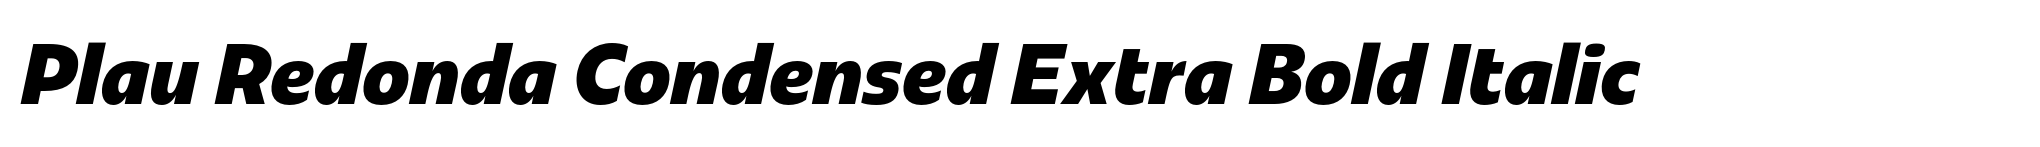 Plau Redonda Condensed Extra Bold Italic image